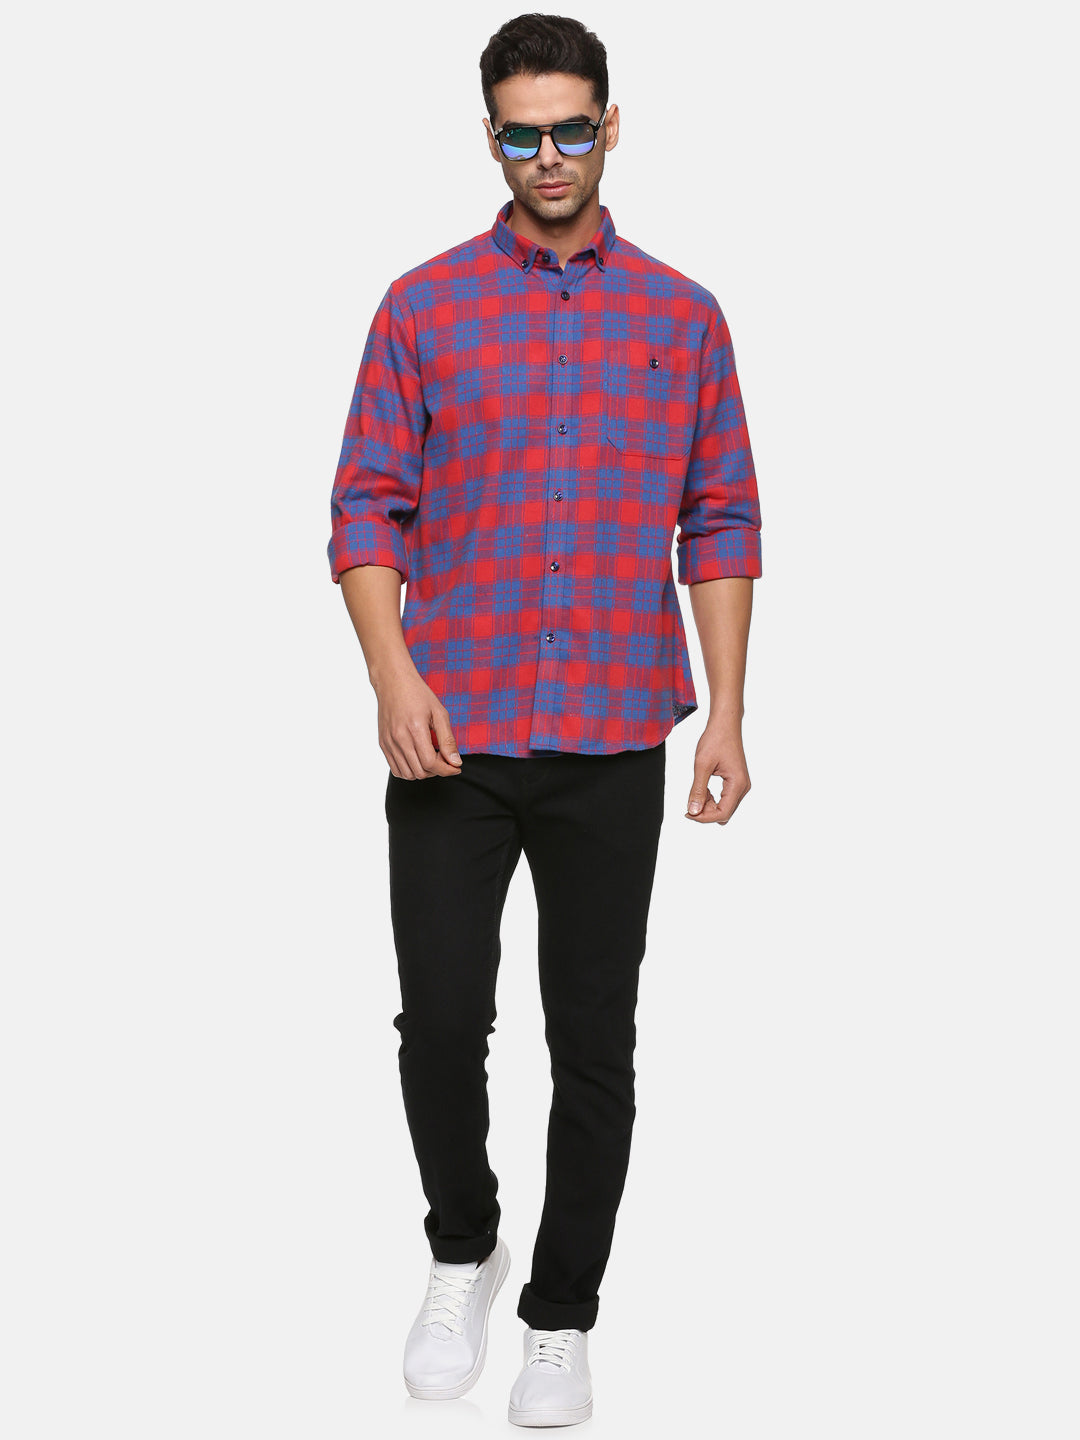 Men Red & Blue Checkered Slim Fit Casual Shirt, Men's Full Sleeve Cotton Shirt